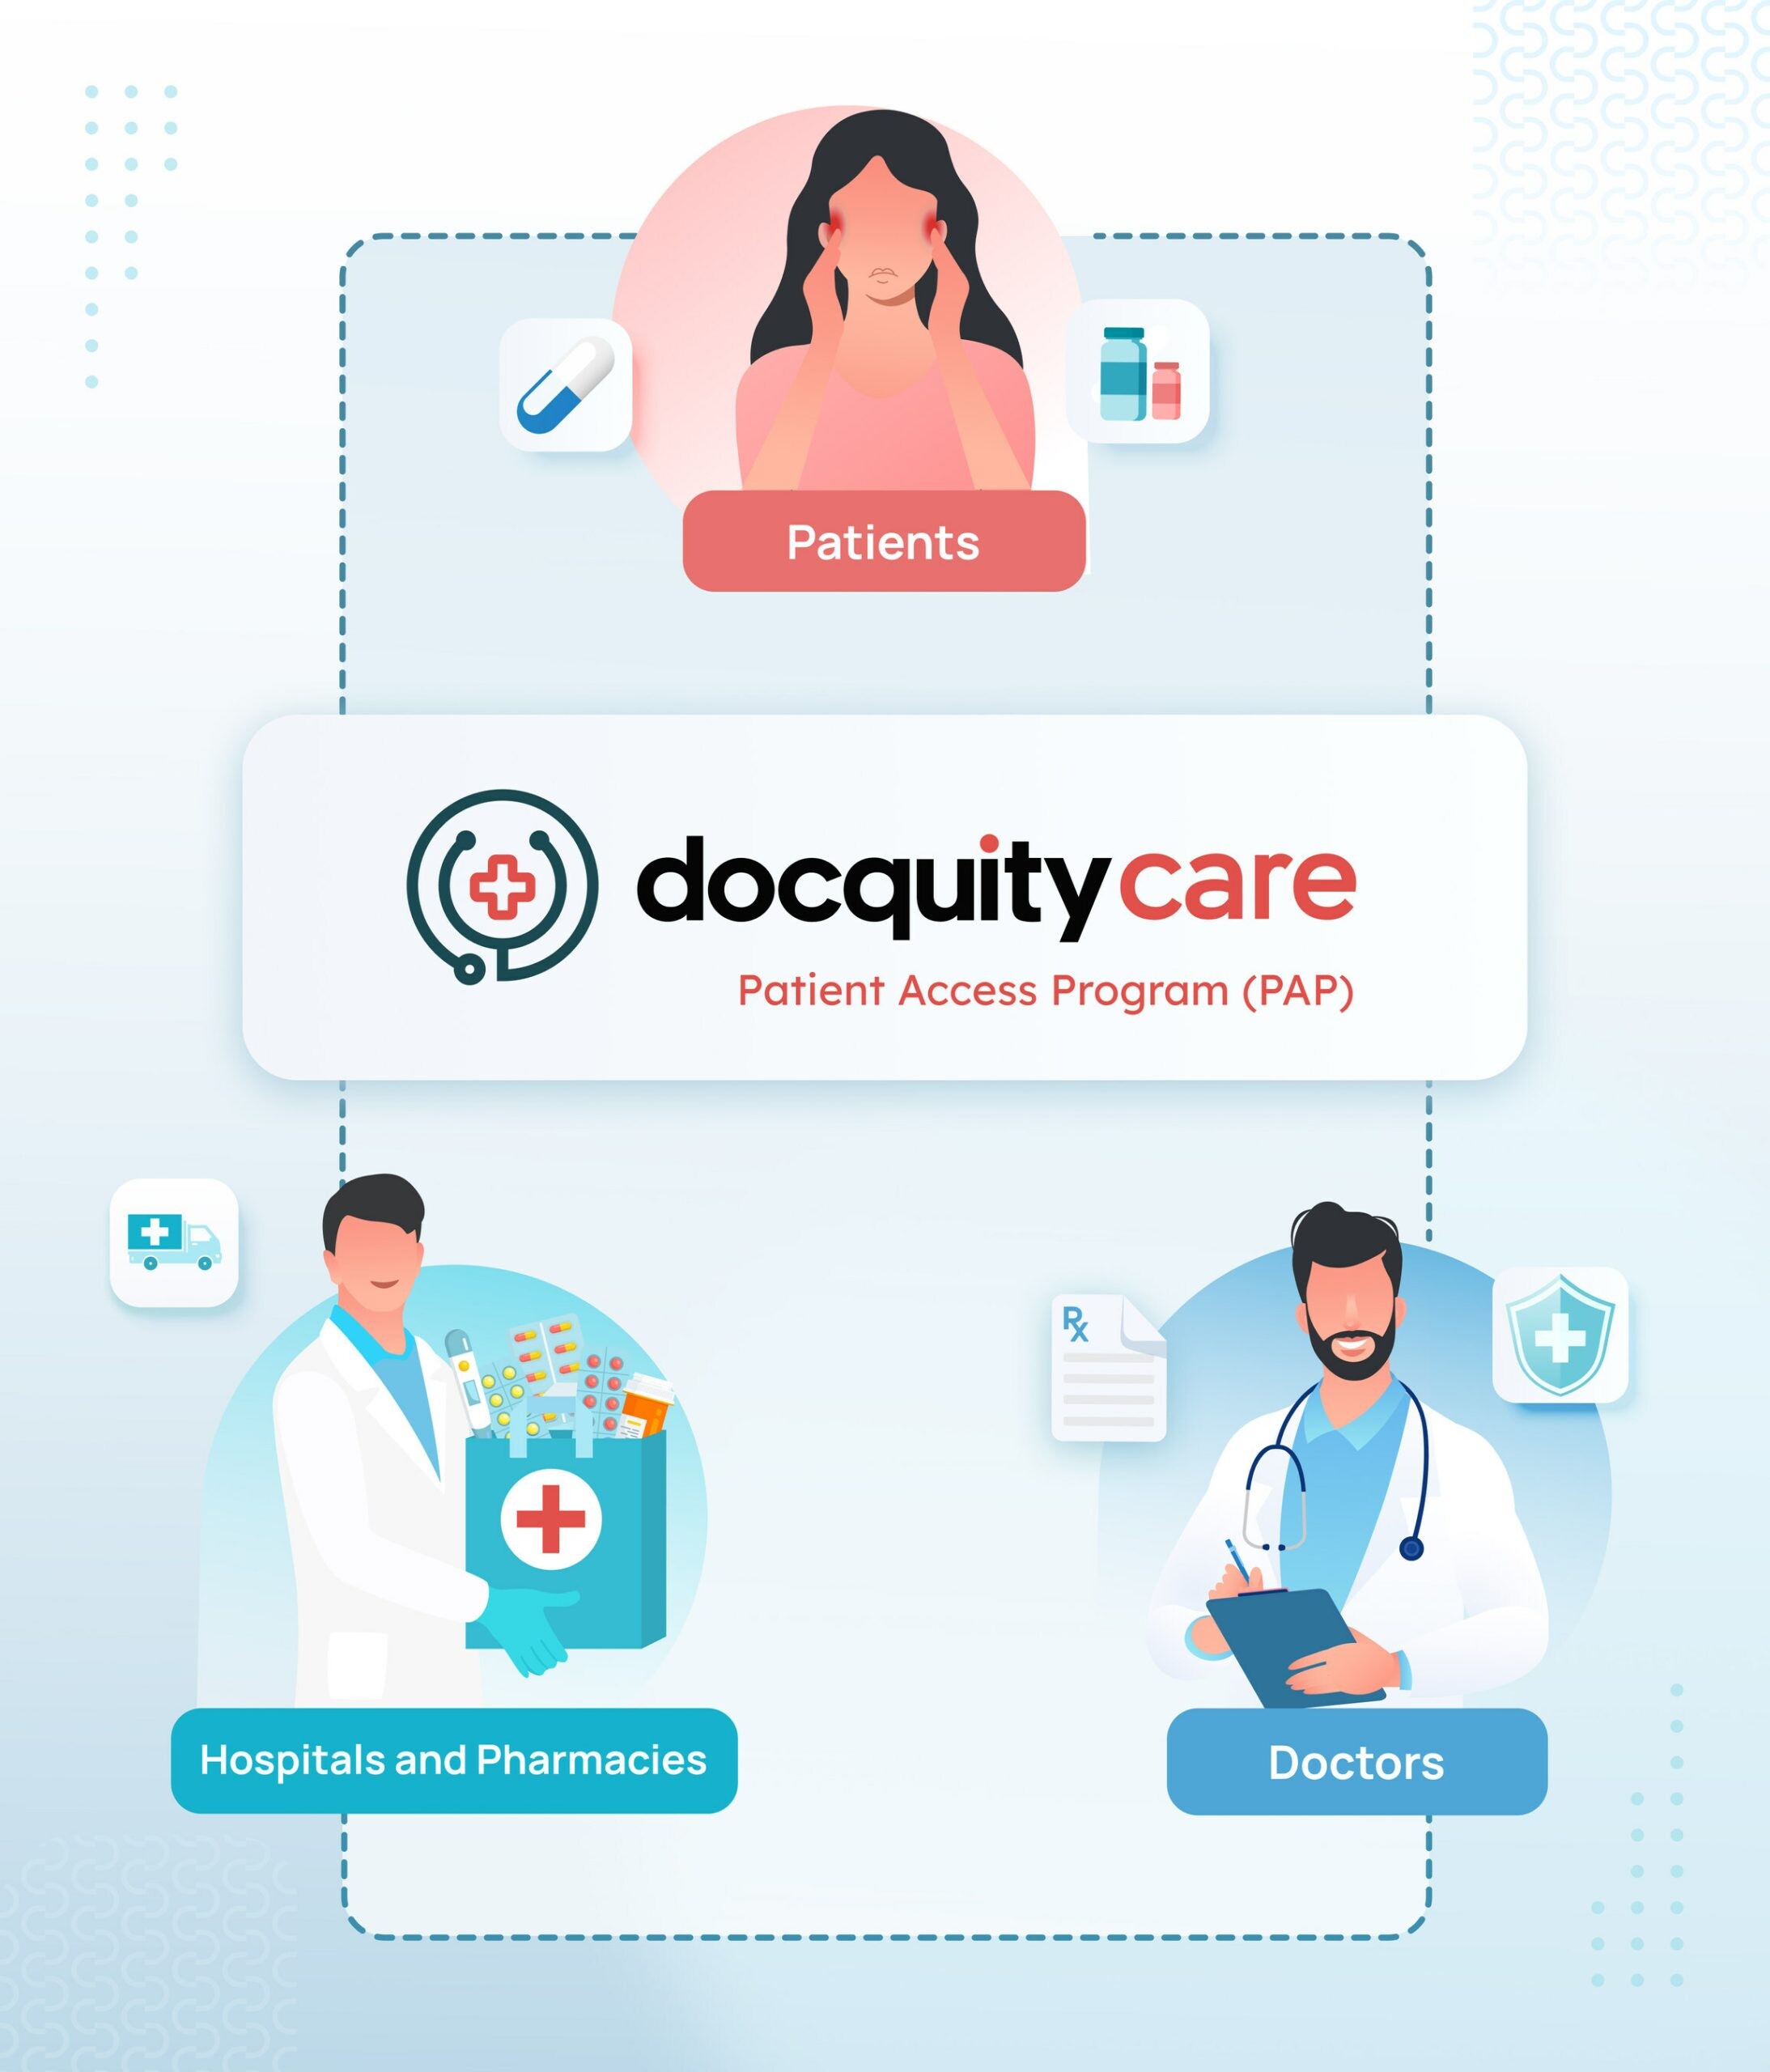 Docquity ขยายโครงการเข้าถึงยาแบบดิจิทัล มุ่งยกระดับการให้บริการผู้ป่วยในประเทศไทยให้ดียิ่งขึ้น